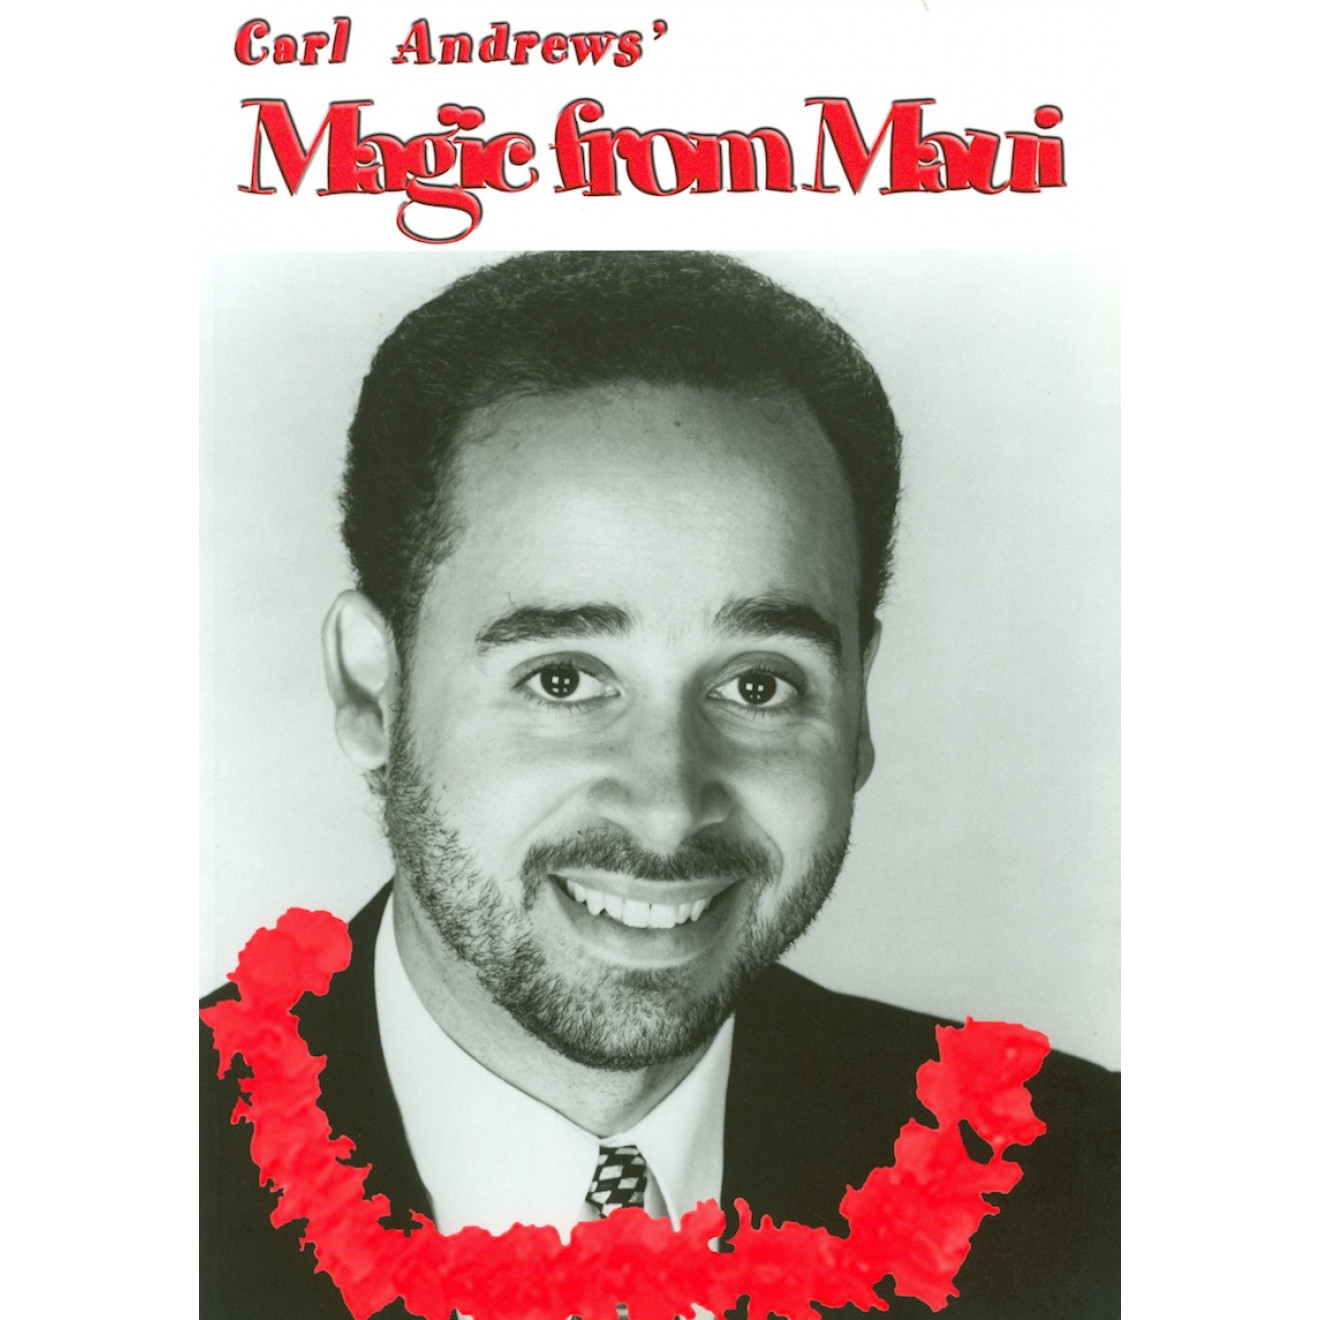 Magic from Maui - Carl Andrews